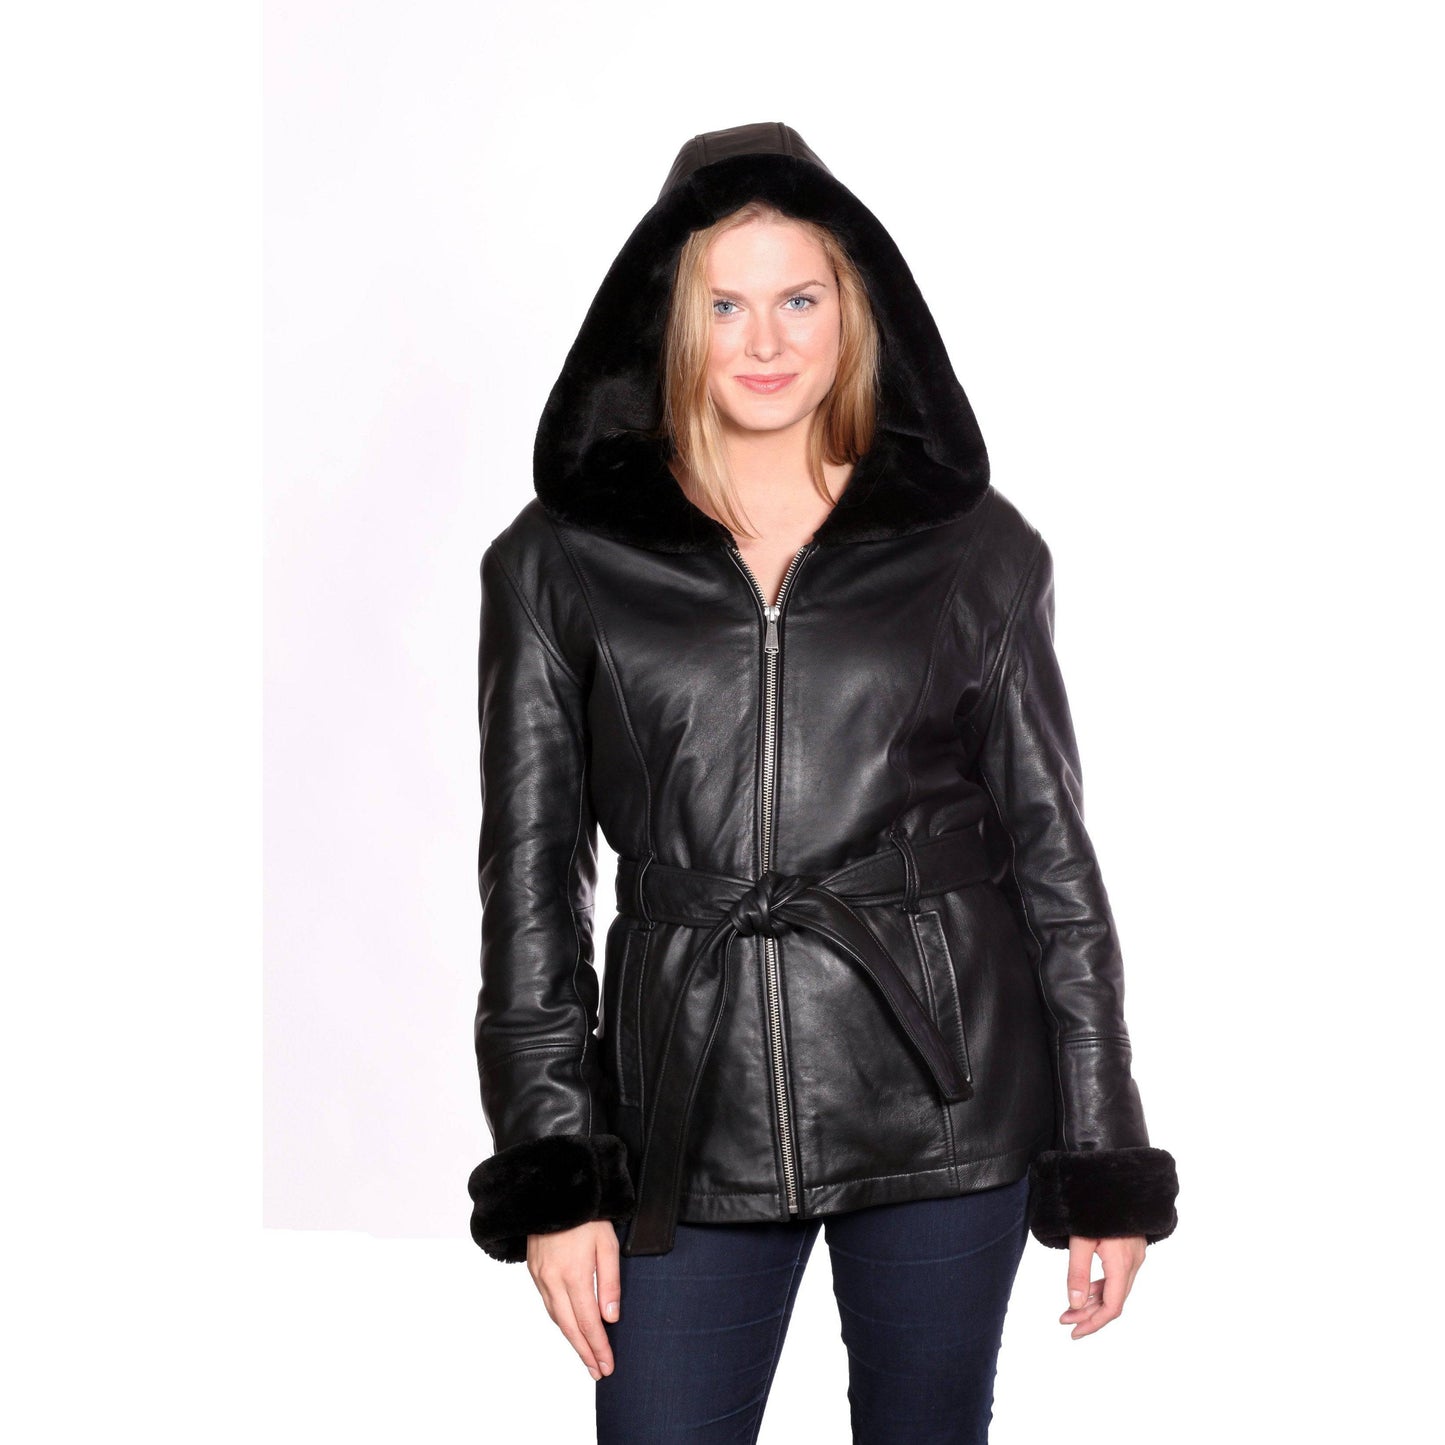 Christian NY Women's Shawl-Collar Hooded Leather Coat